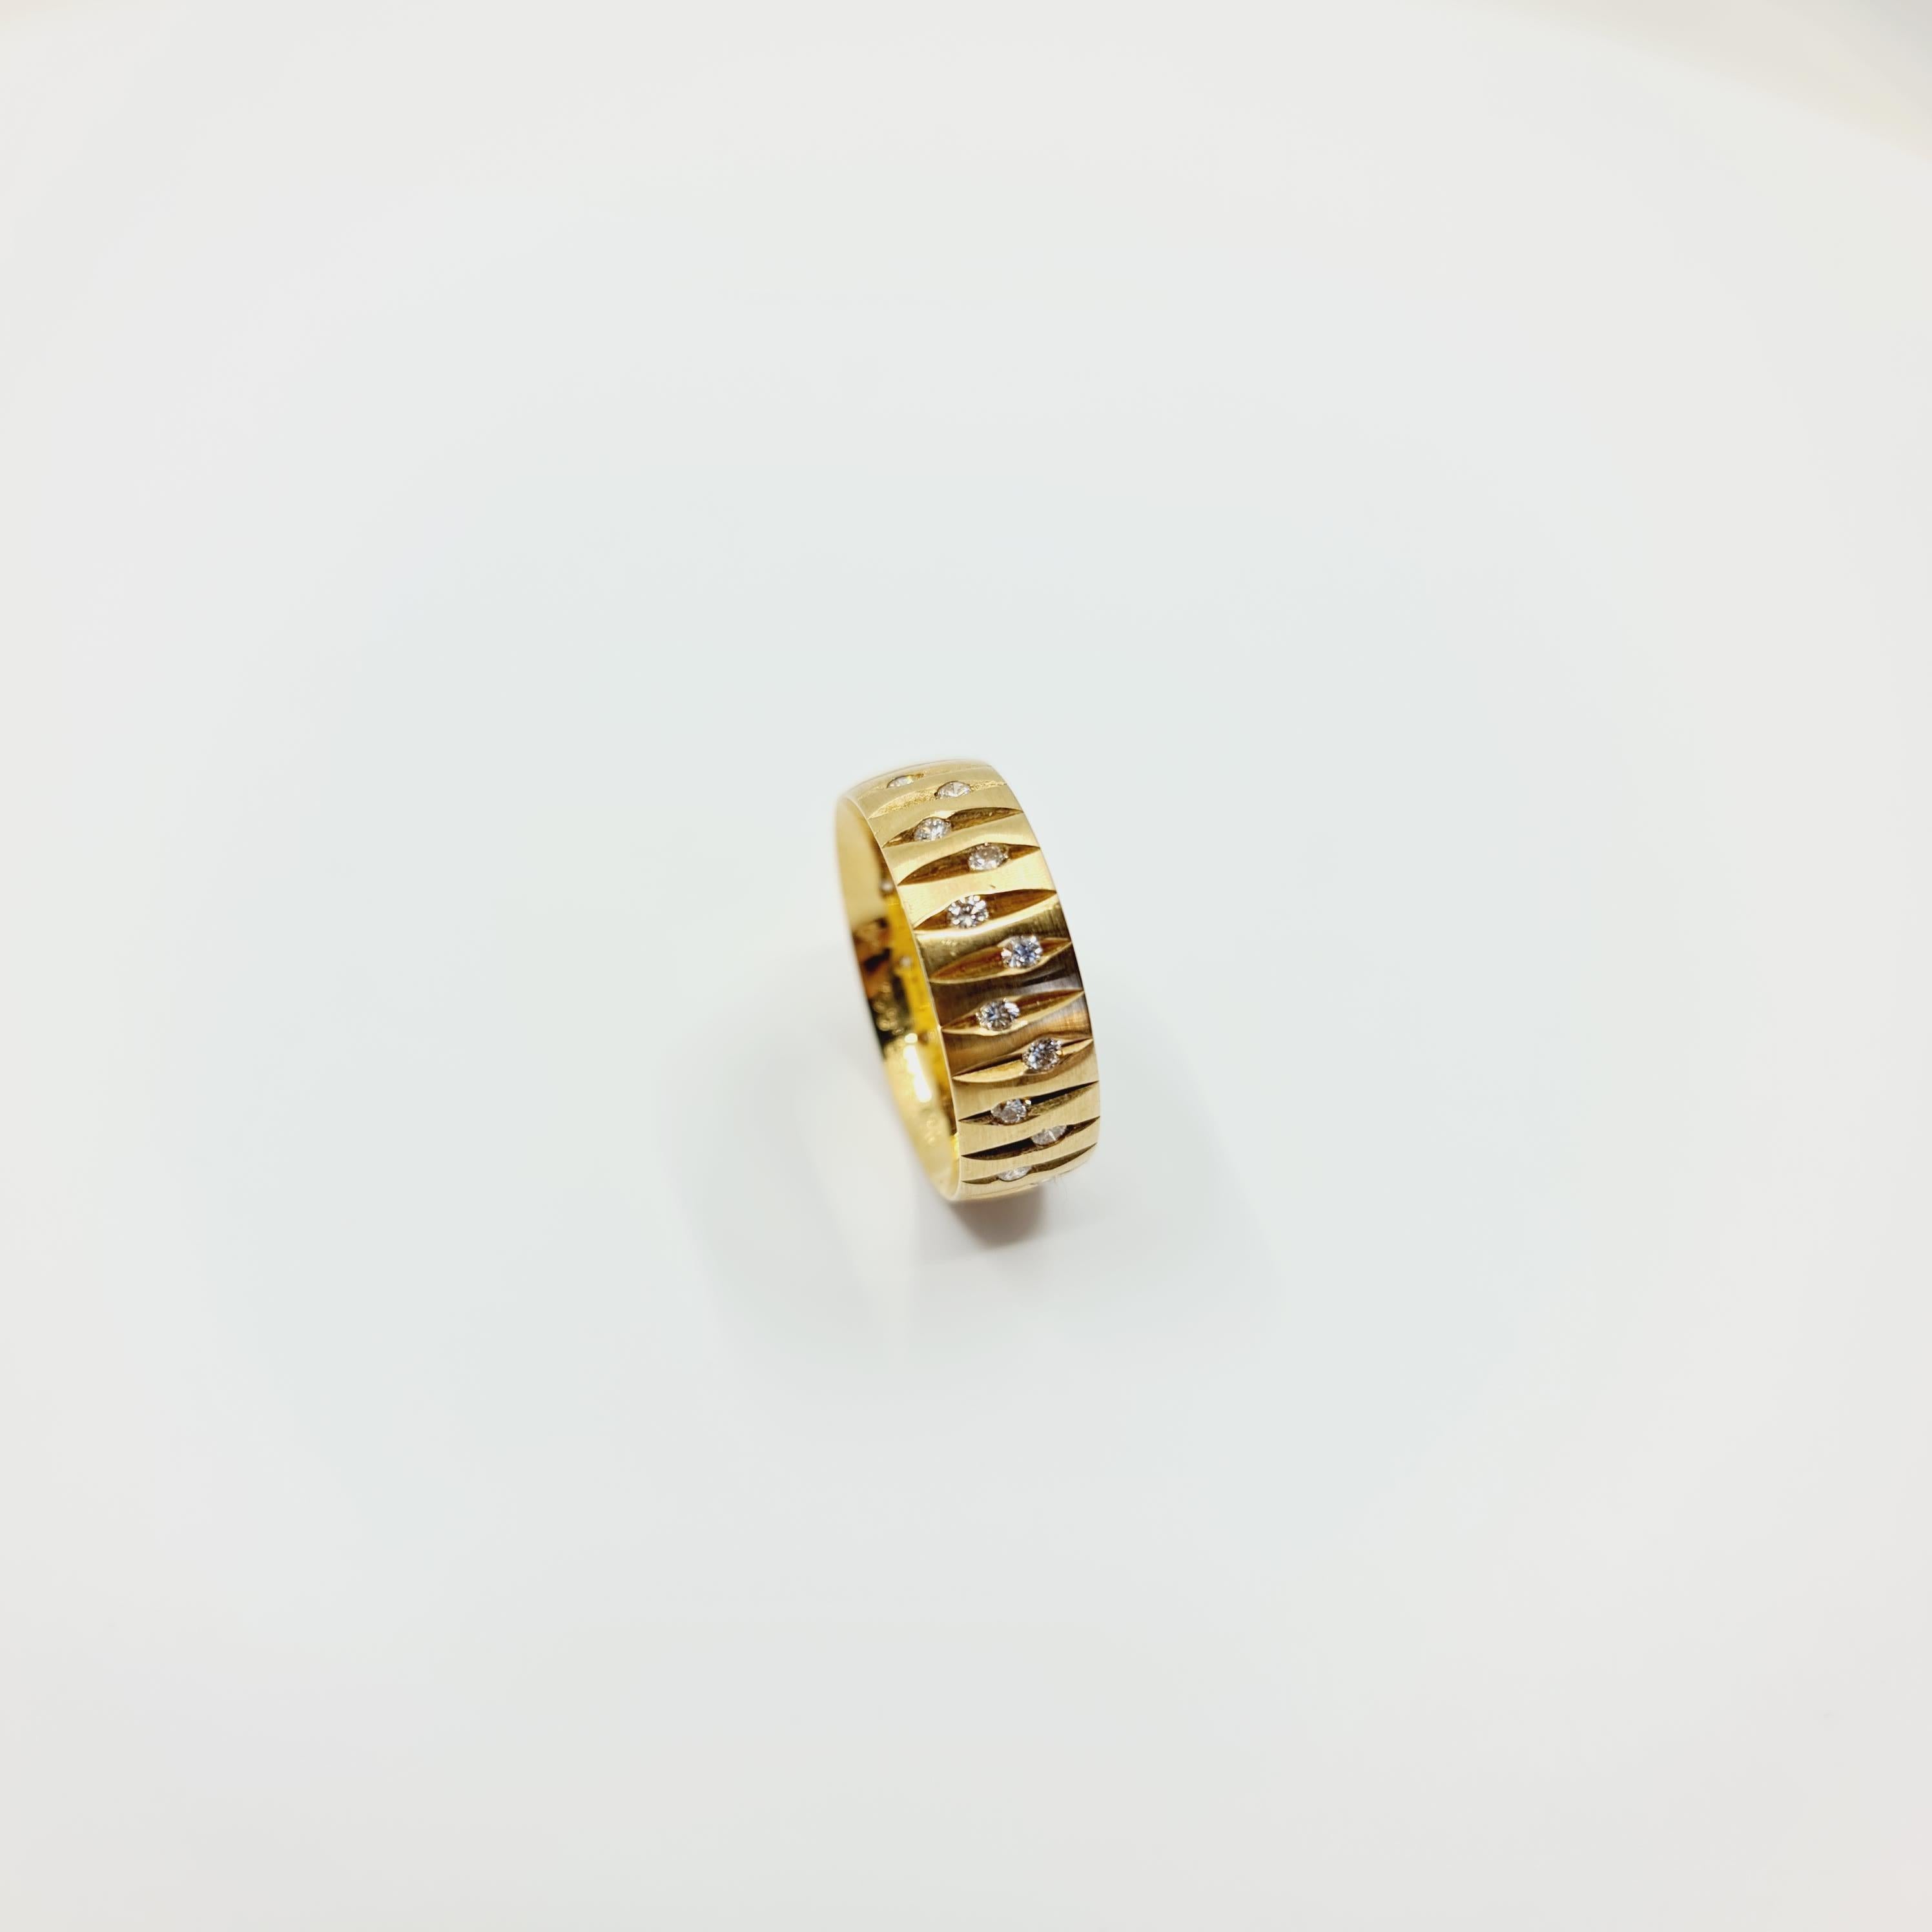 0.56 Carat Diamond Ring G/SI1 18k Gold, 28 Brilliant Cut Diamonds For Sale 2